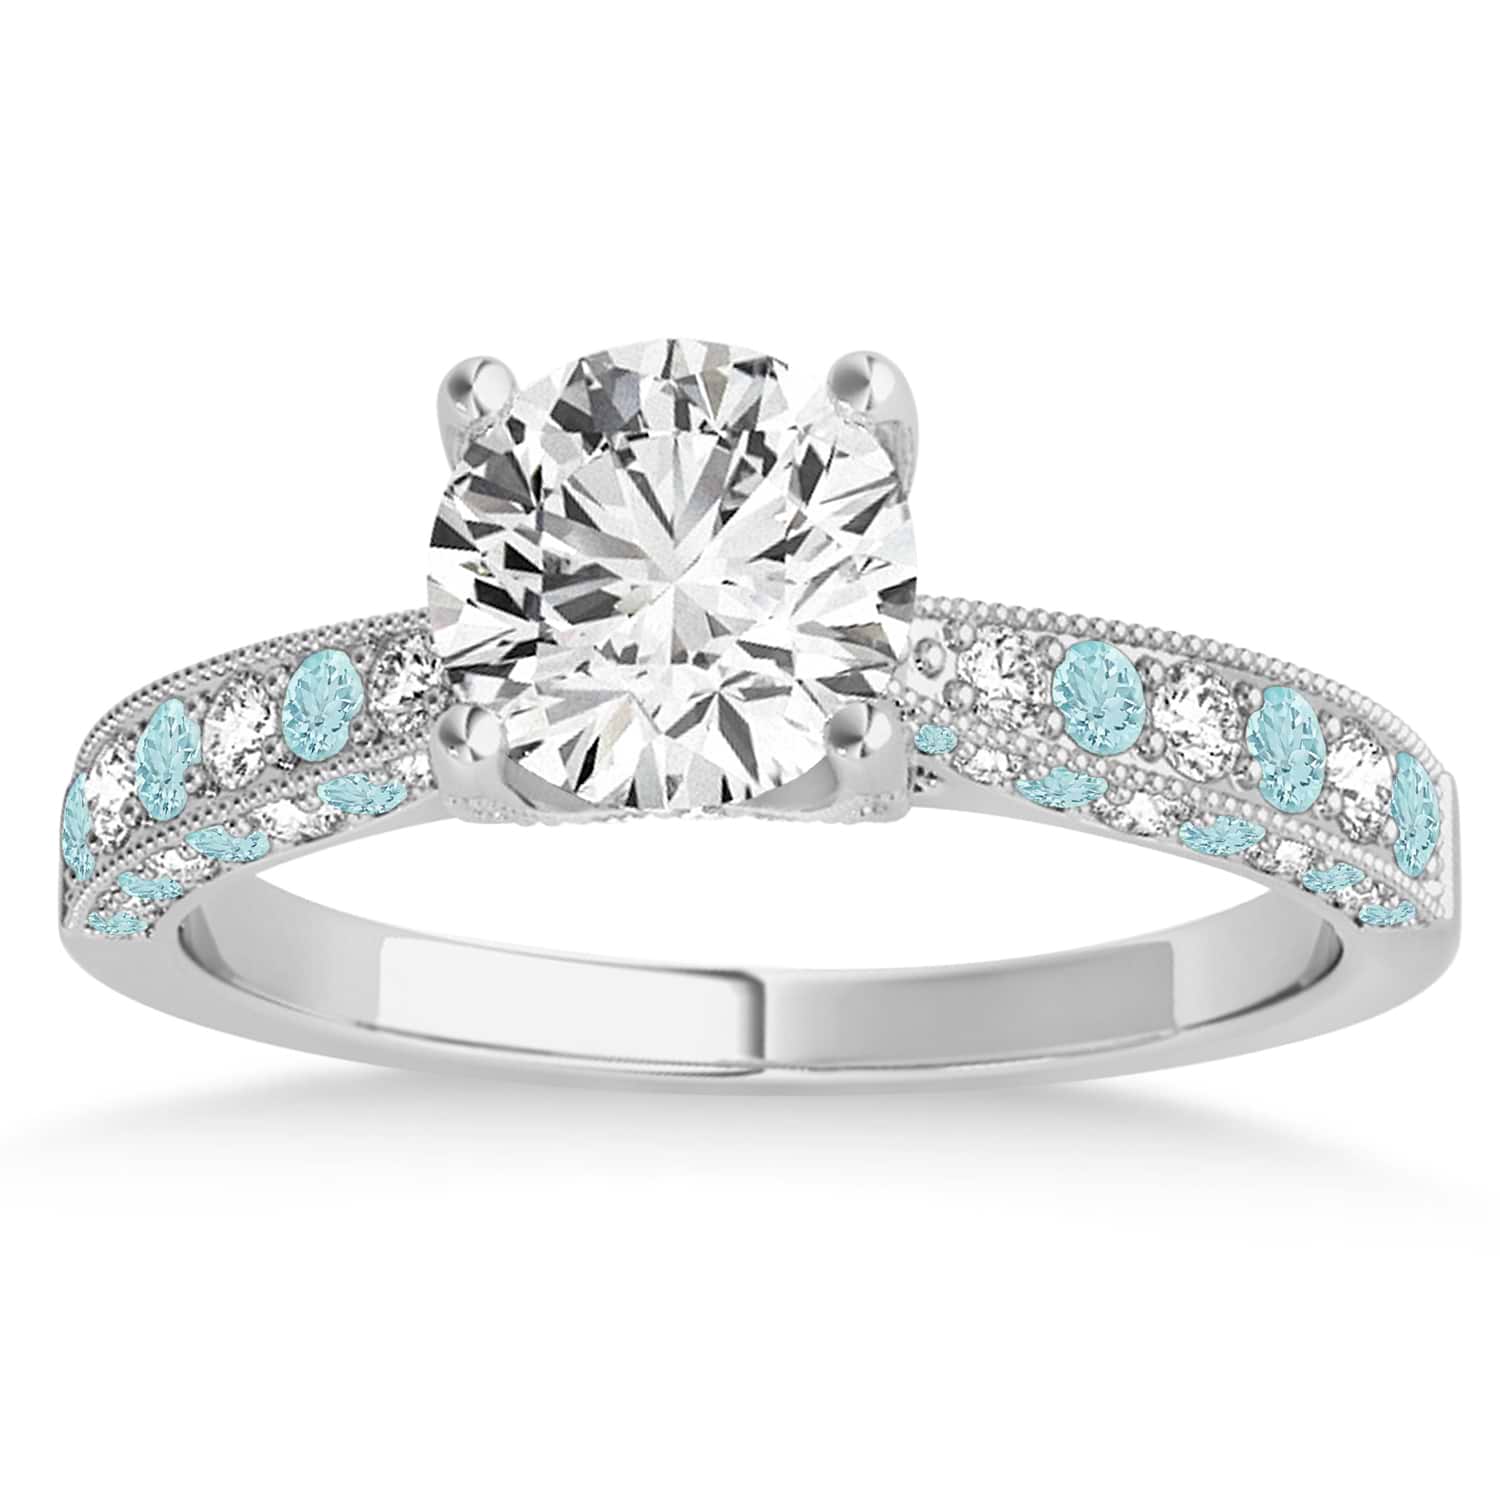 Alternating Diamond & Aquamarine Engravable Engagement Ring in 18k White Gold (0.45ct)